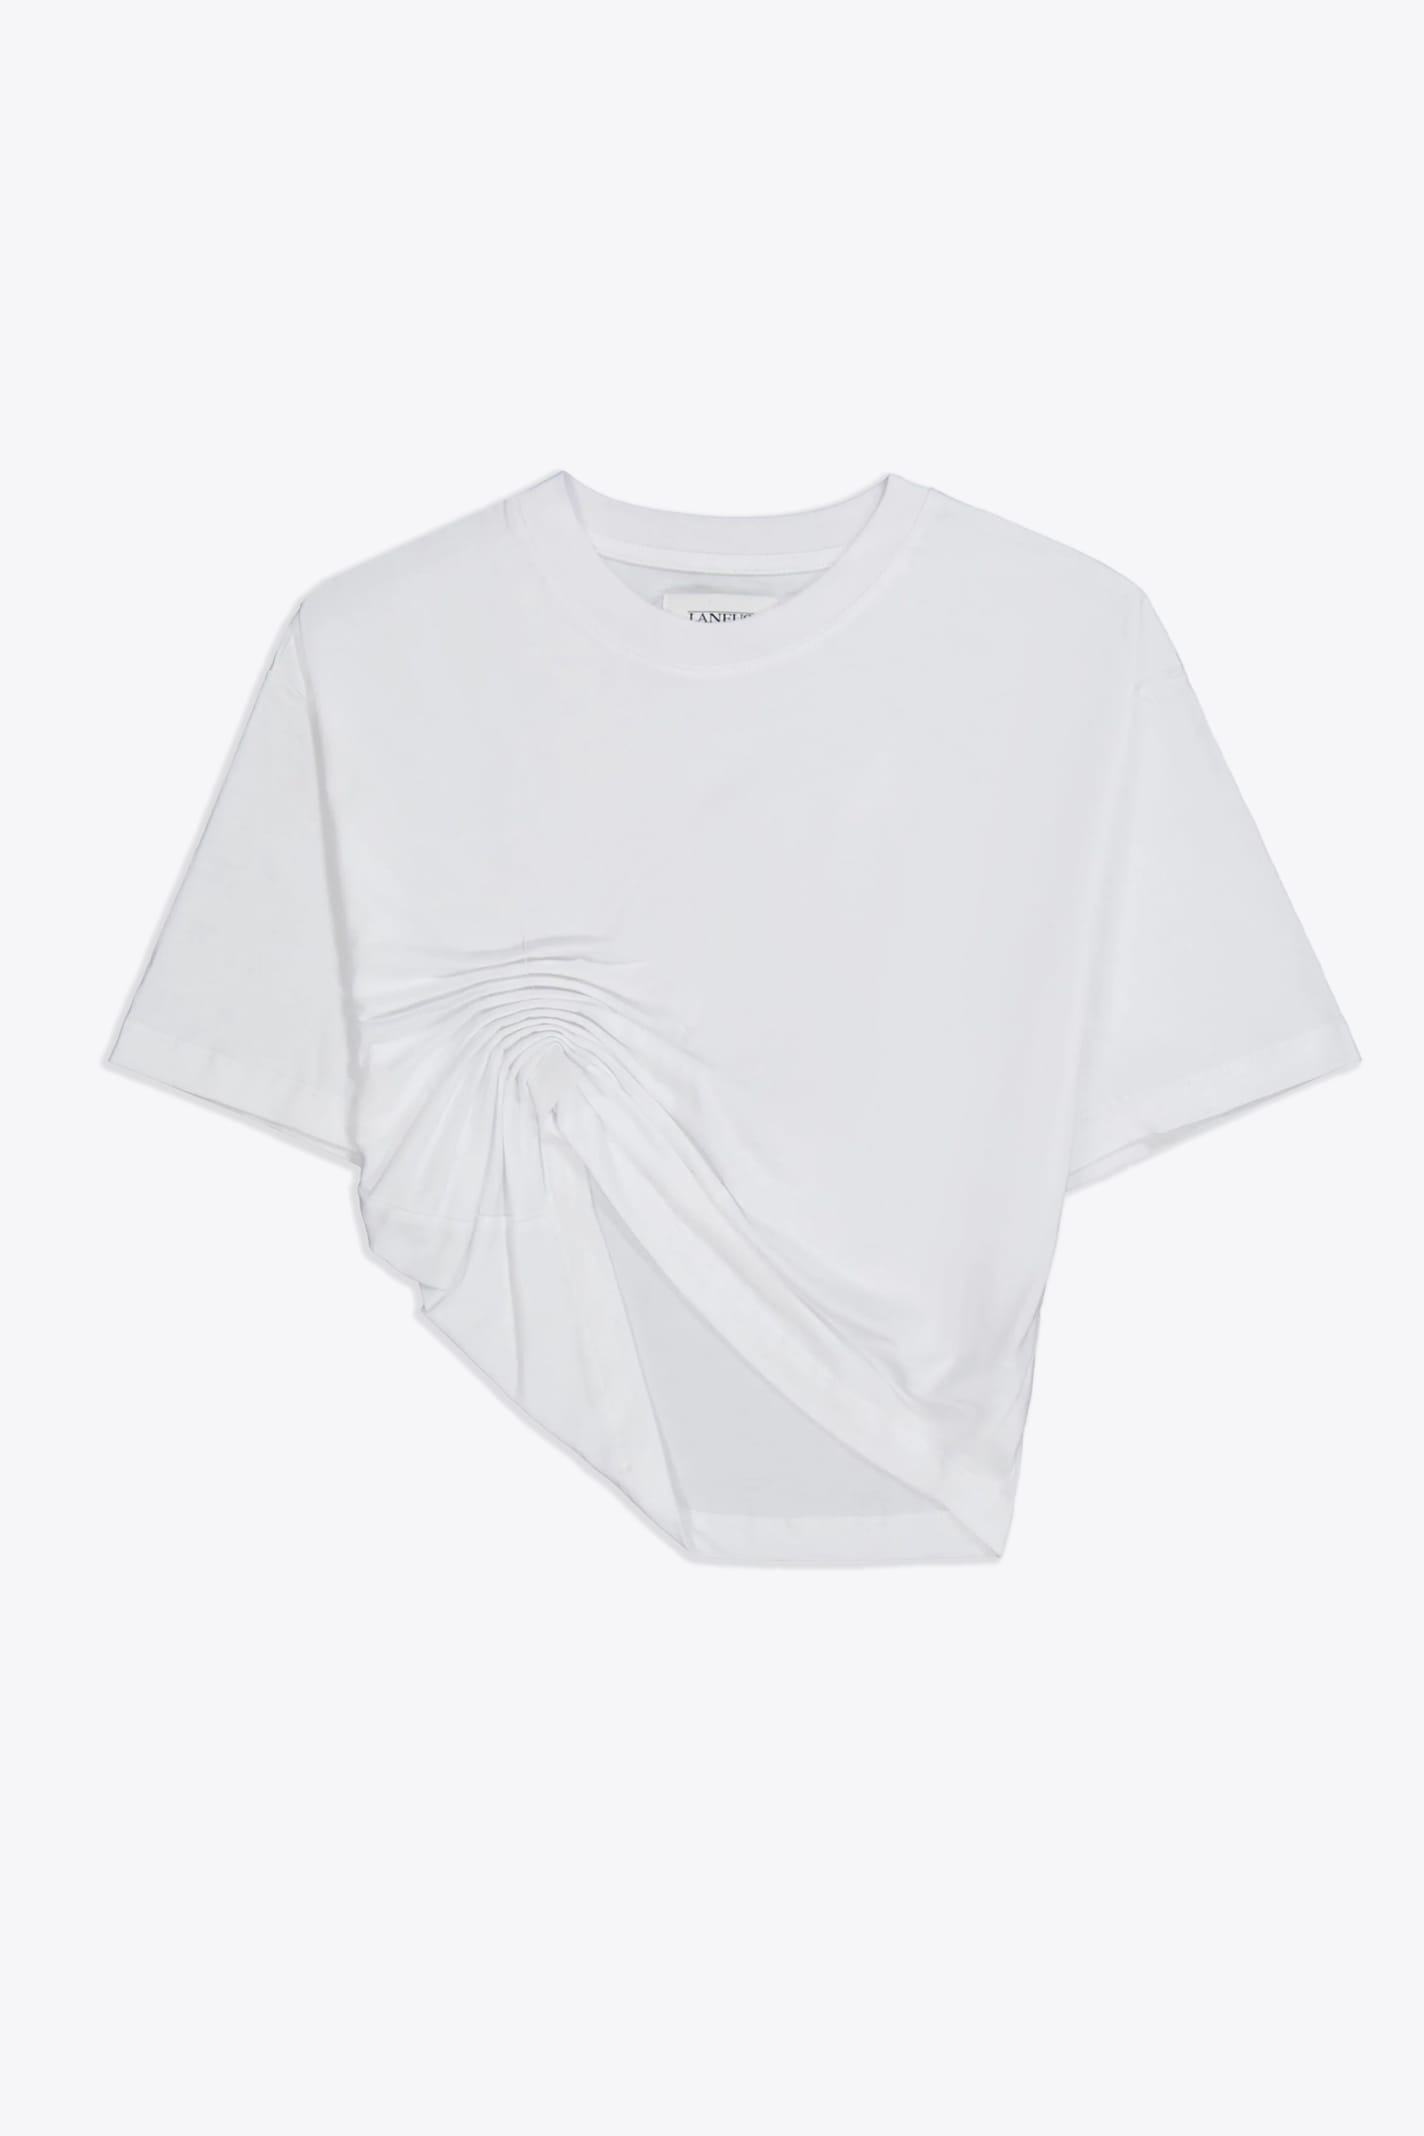 Jersey T-shirt Woman White Cotton Cropped T-shirt With Drapery - Jersey T-shirt